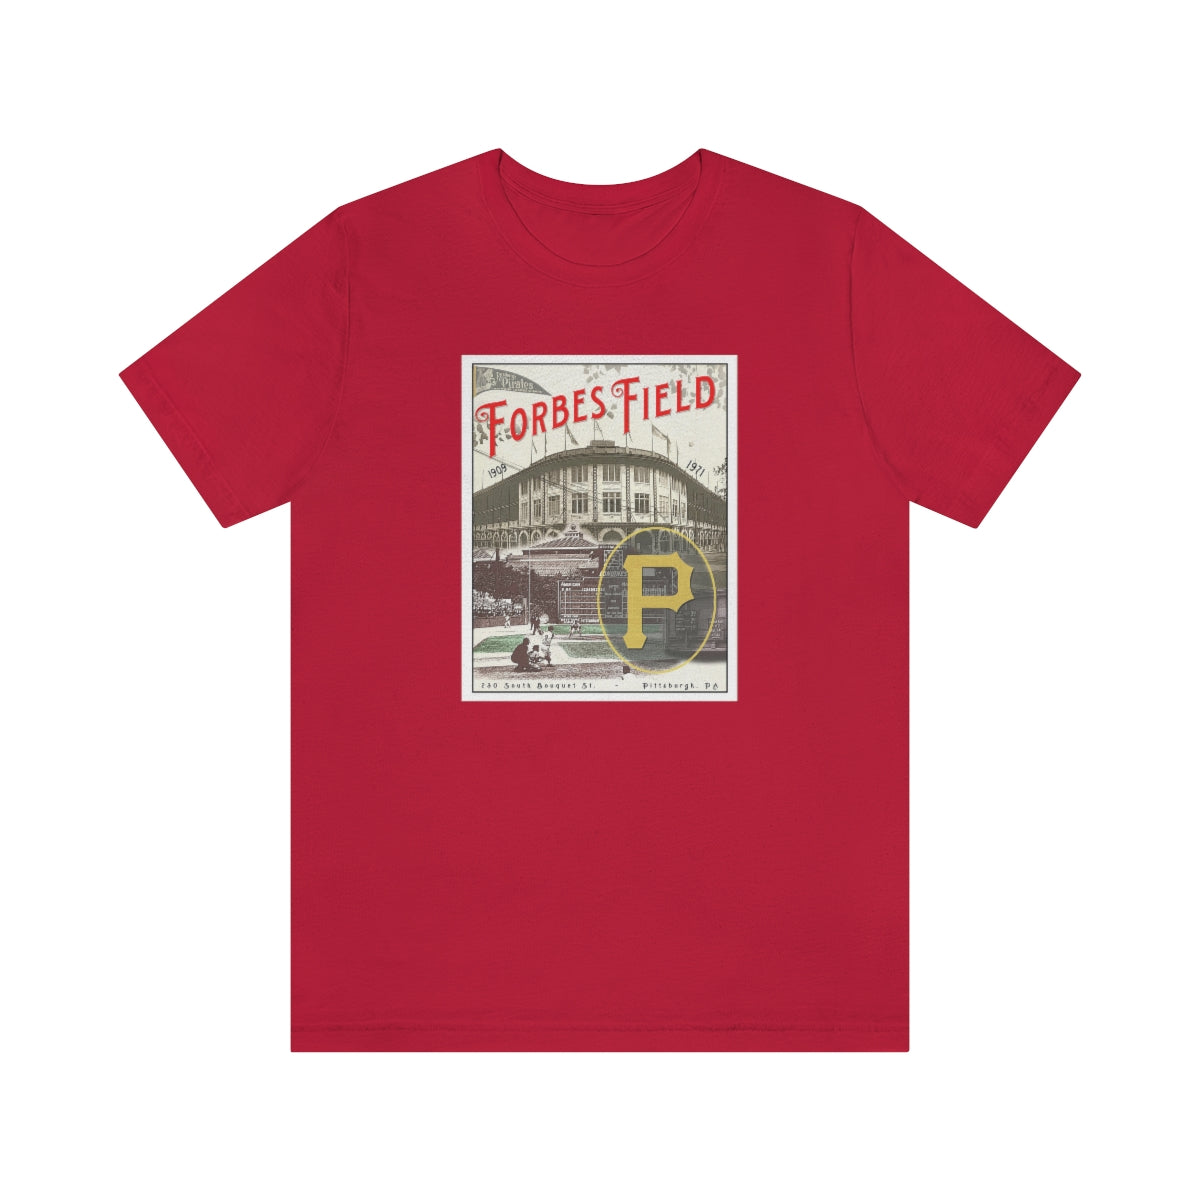 Printify Honus Wagner Legend T-Shirt Short Sleeve Tee